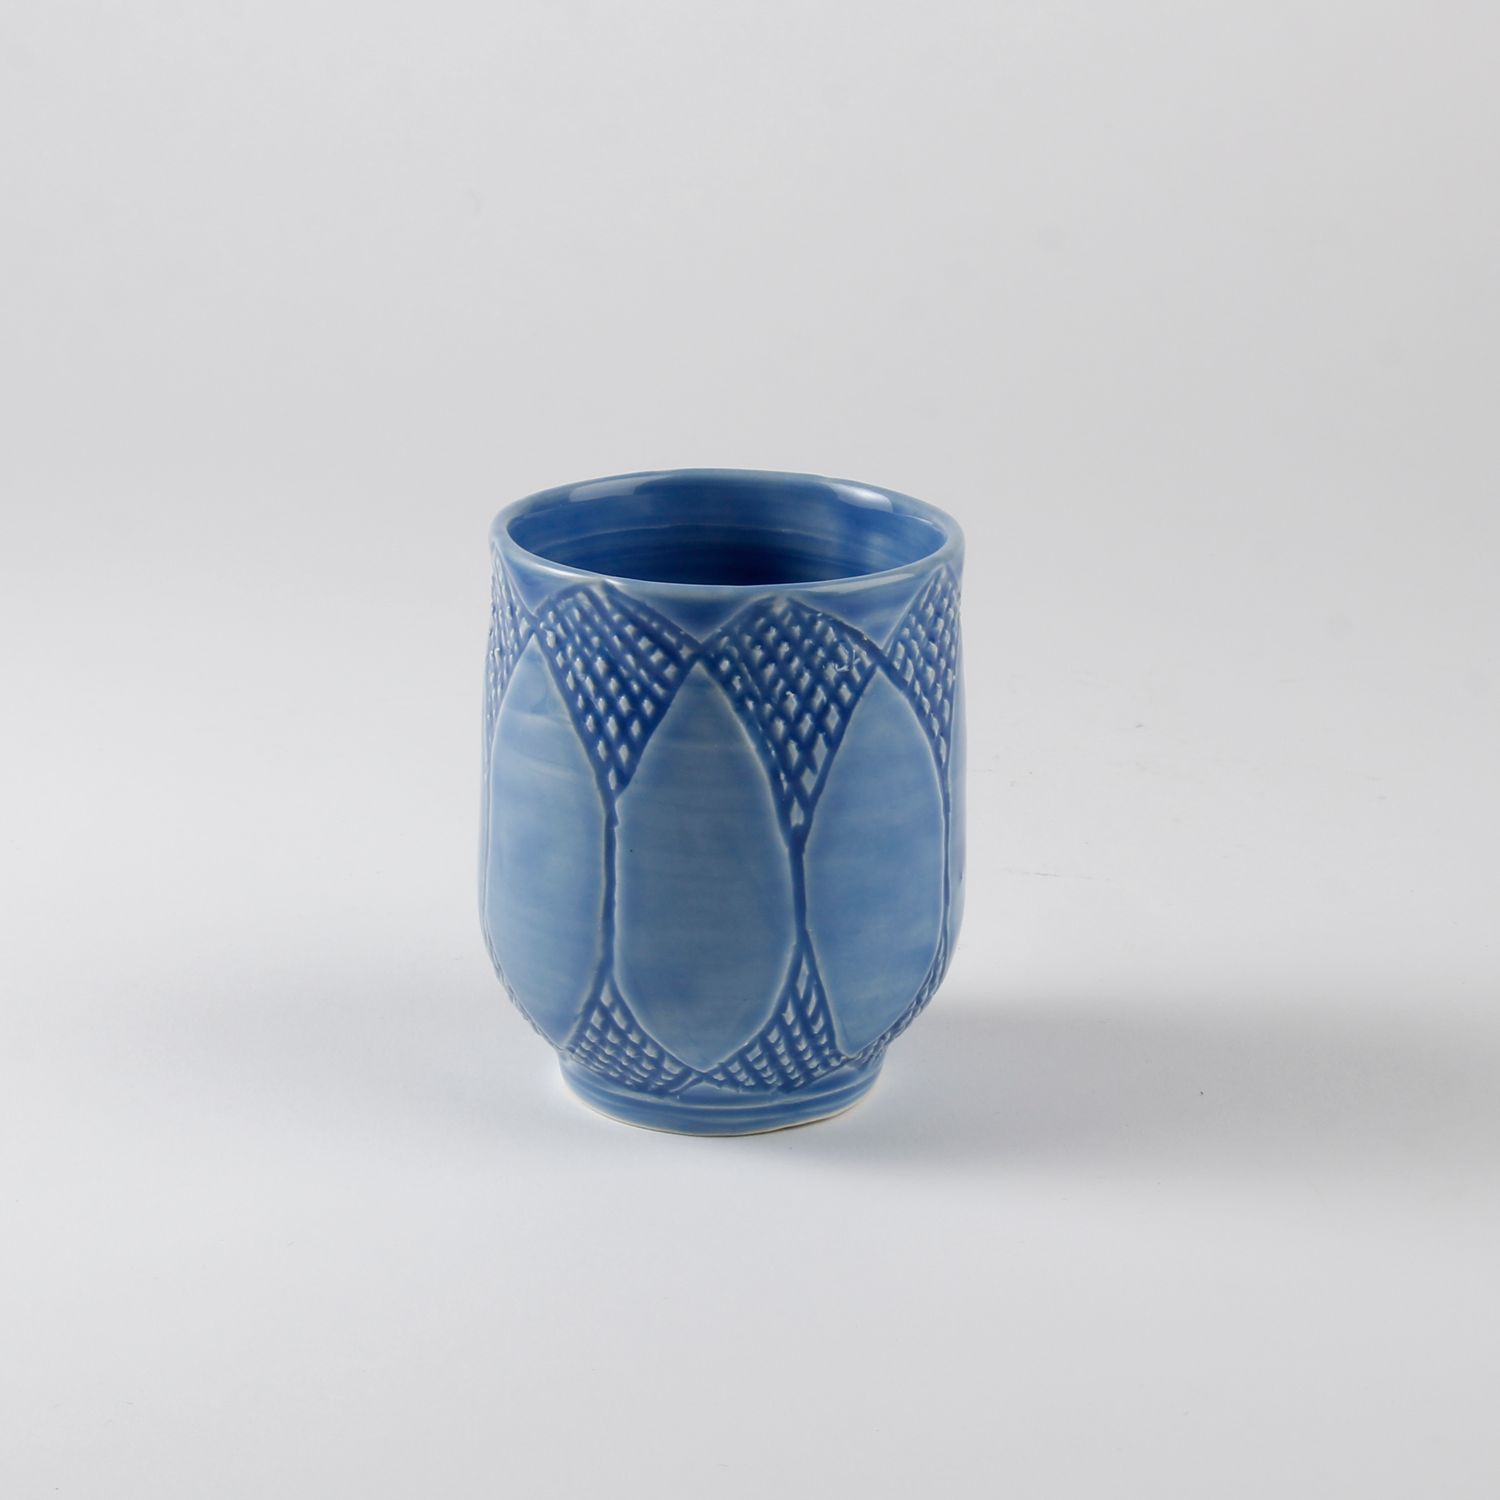 Arlene Kushnir: Carved Cup – Sky Blue Product Image 1 of 2